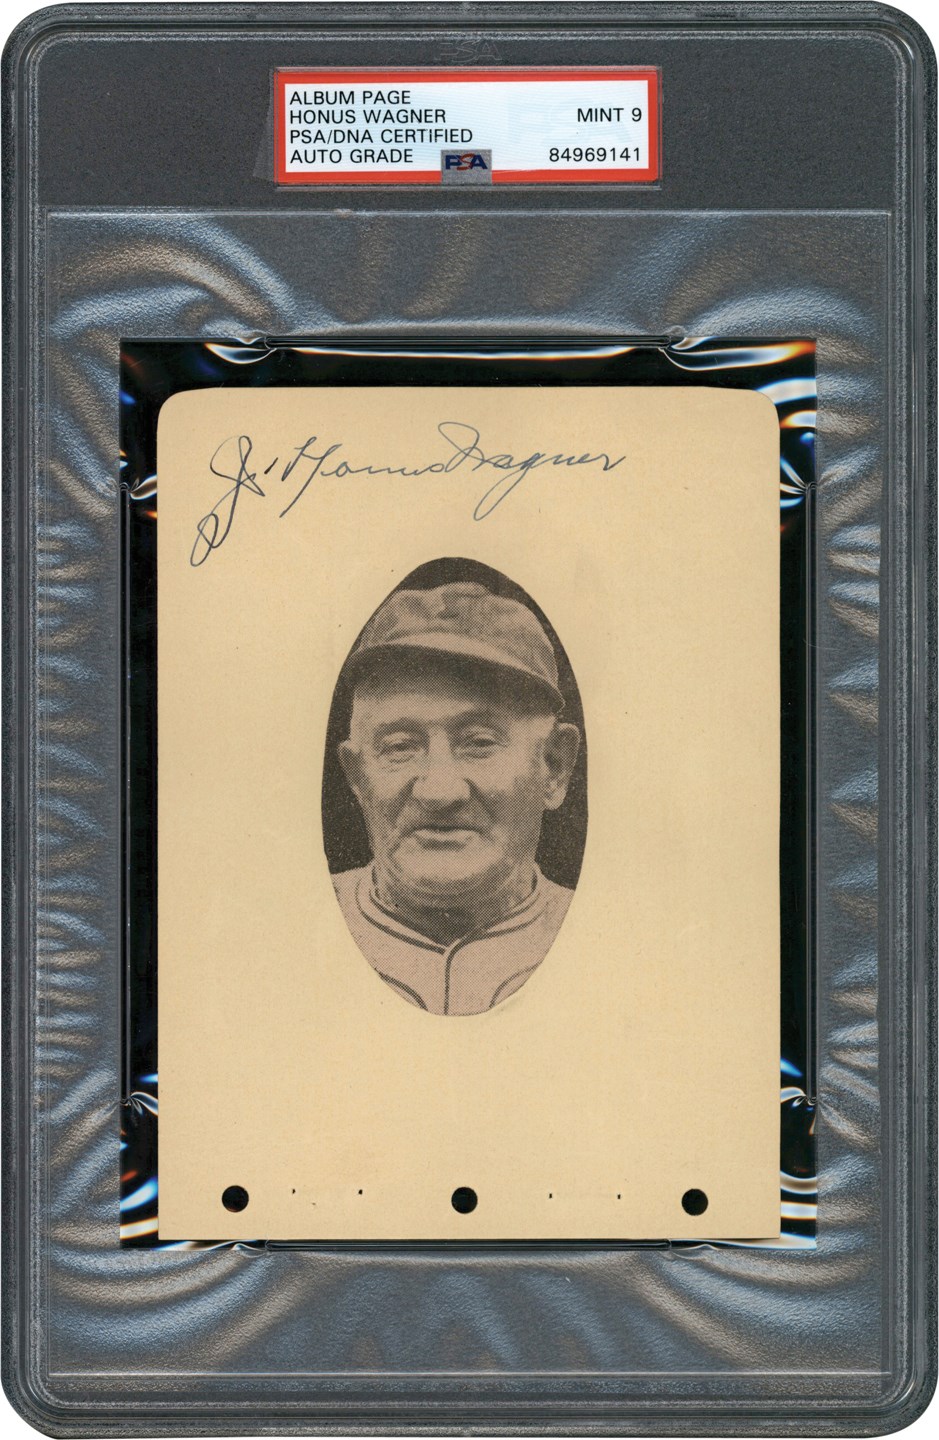 Baseball Autographs - Honus Wagner Signed Album Page with Photo (PSA MINT 9)